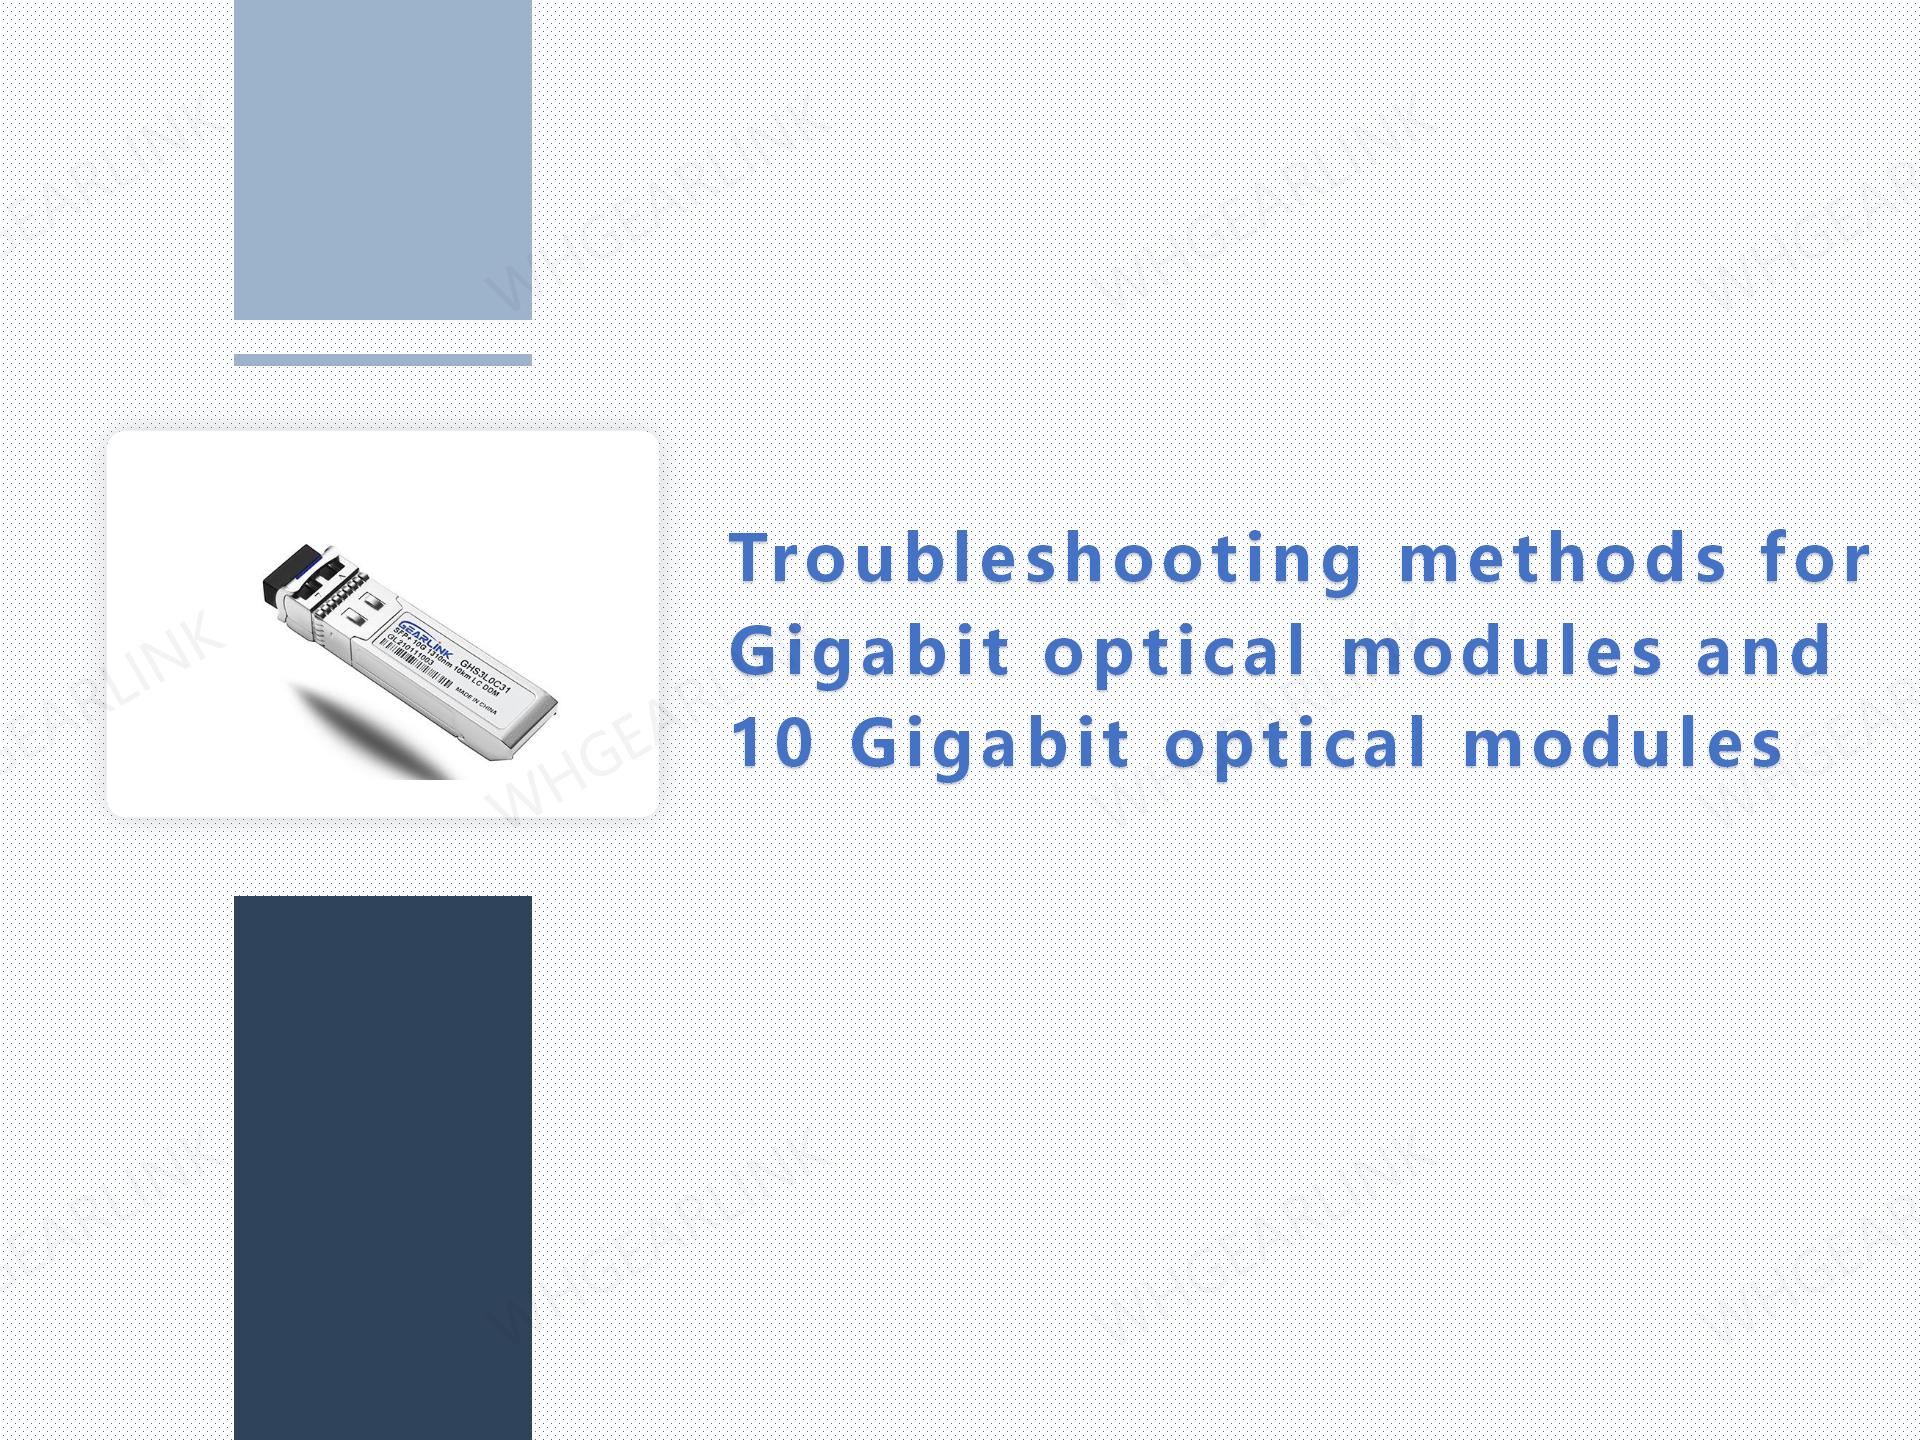 Troubleshooting methods for Gigabit optical modules and 10 Gigabit optical modules